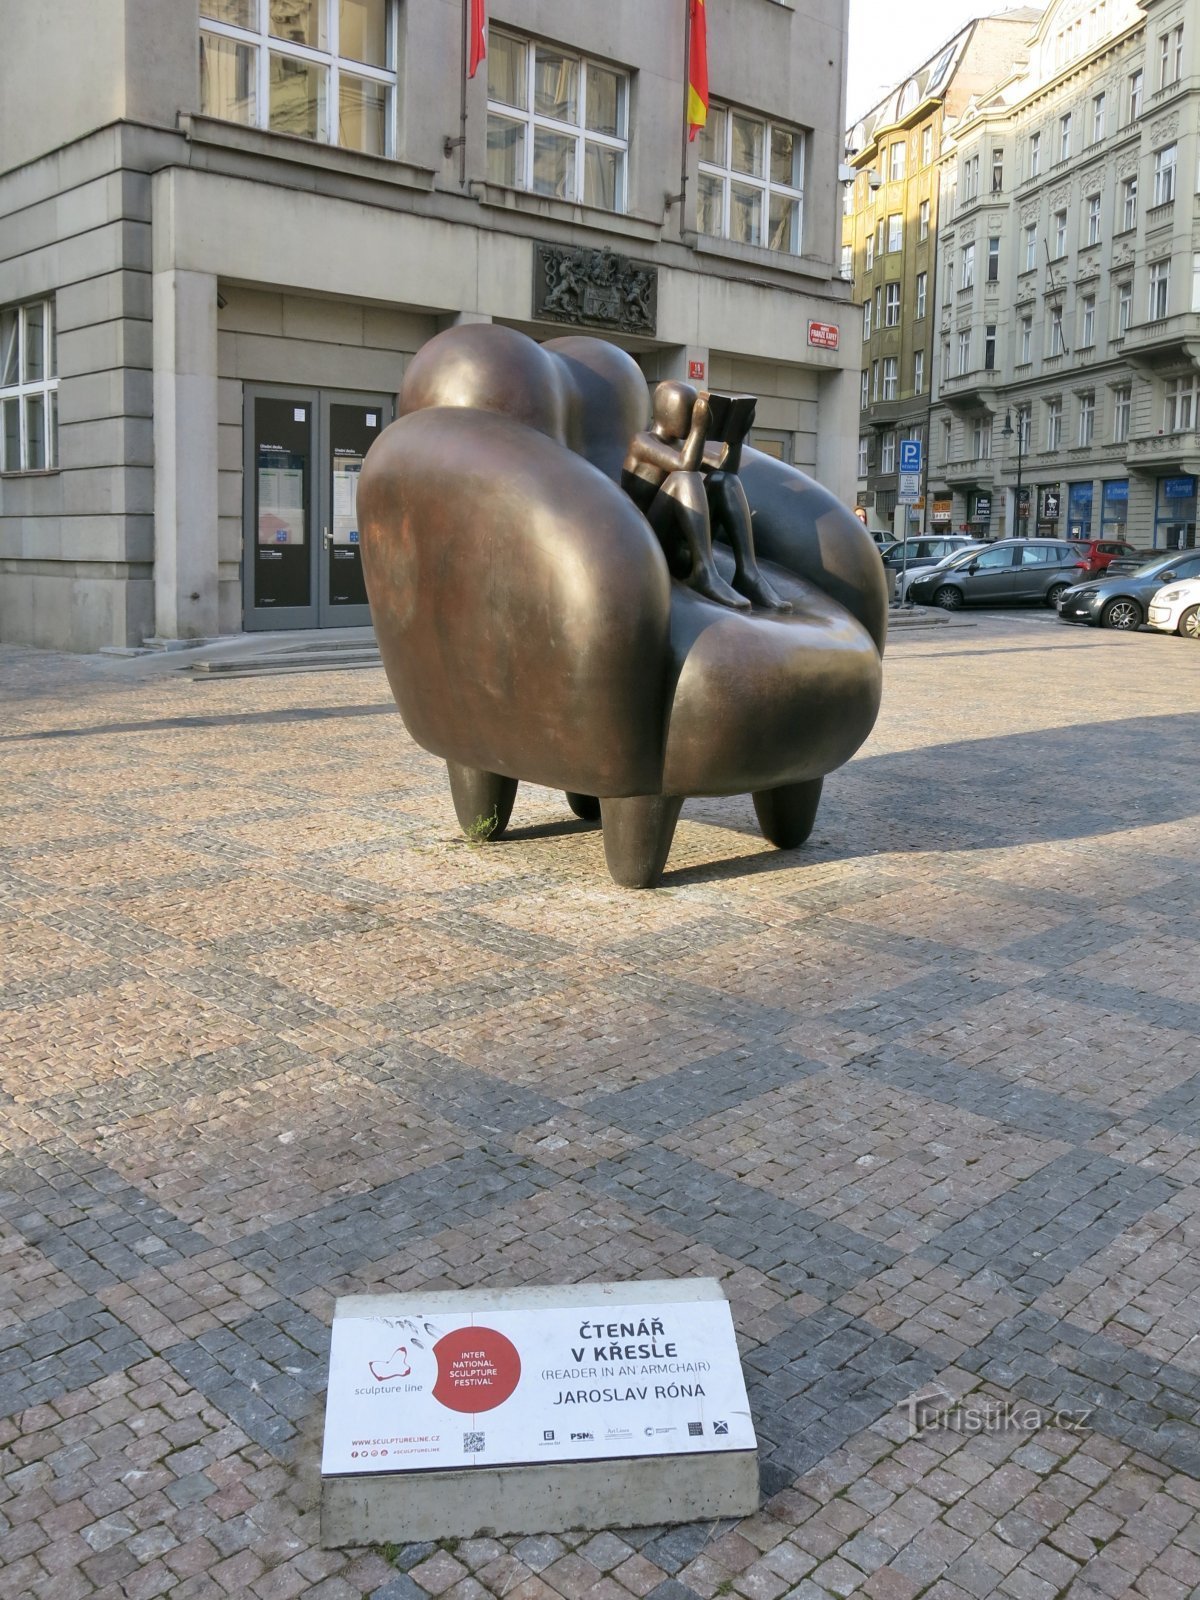 Praga (Orașul Vechi) – Rónův Čtenář într-un scaun în piața Franz Kafka